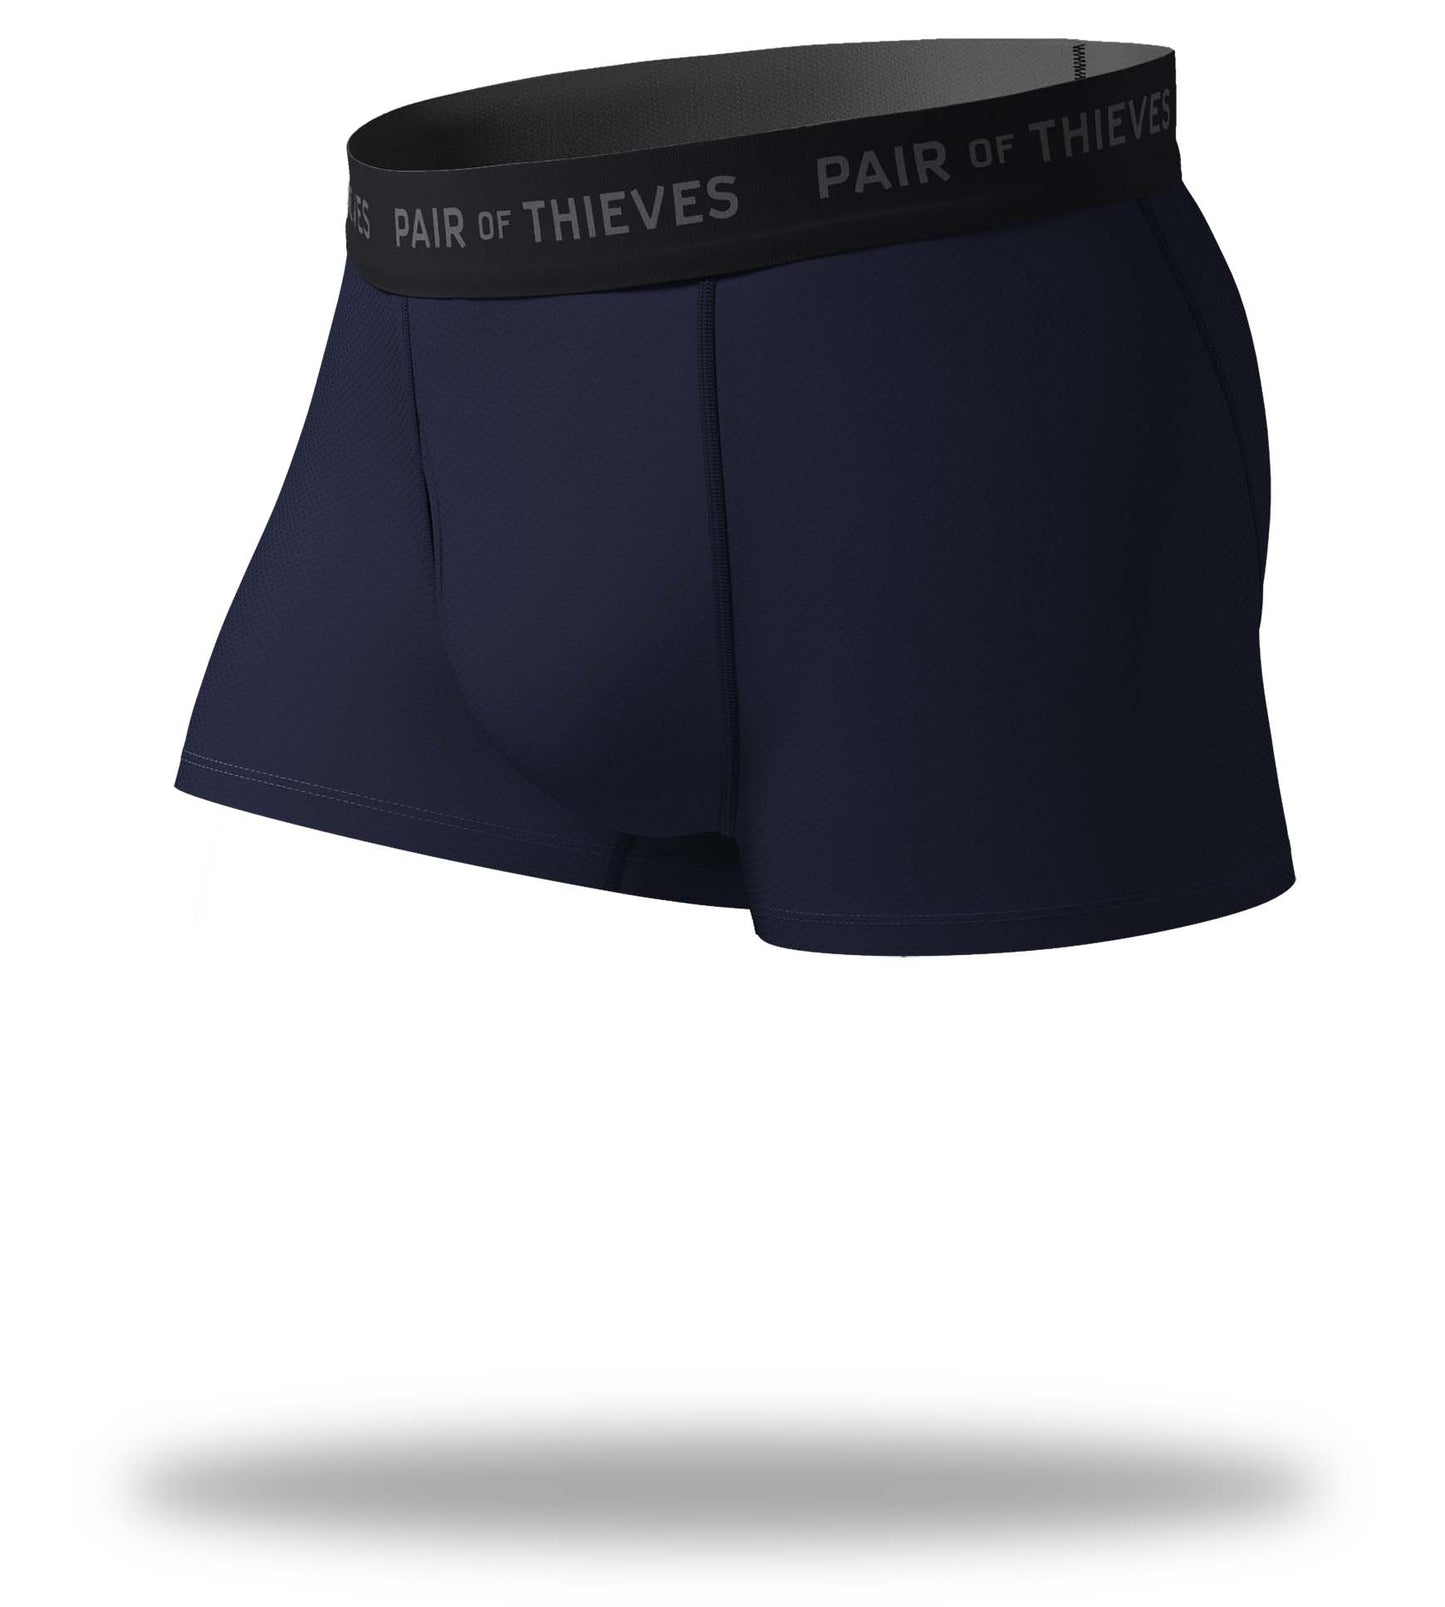 SuperFit Trunks, navy with grey logo on black waistband